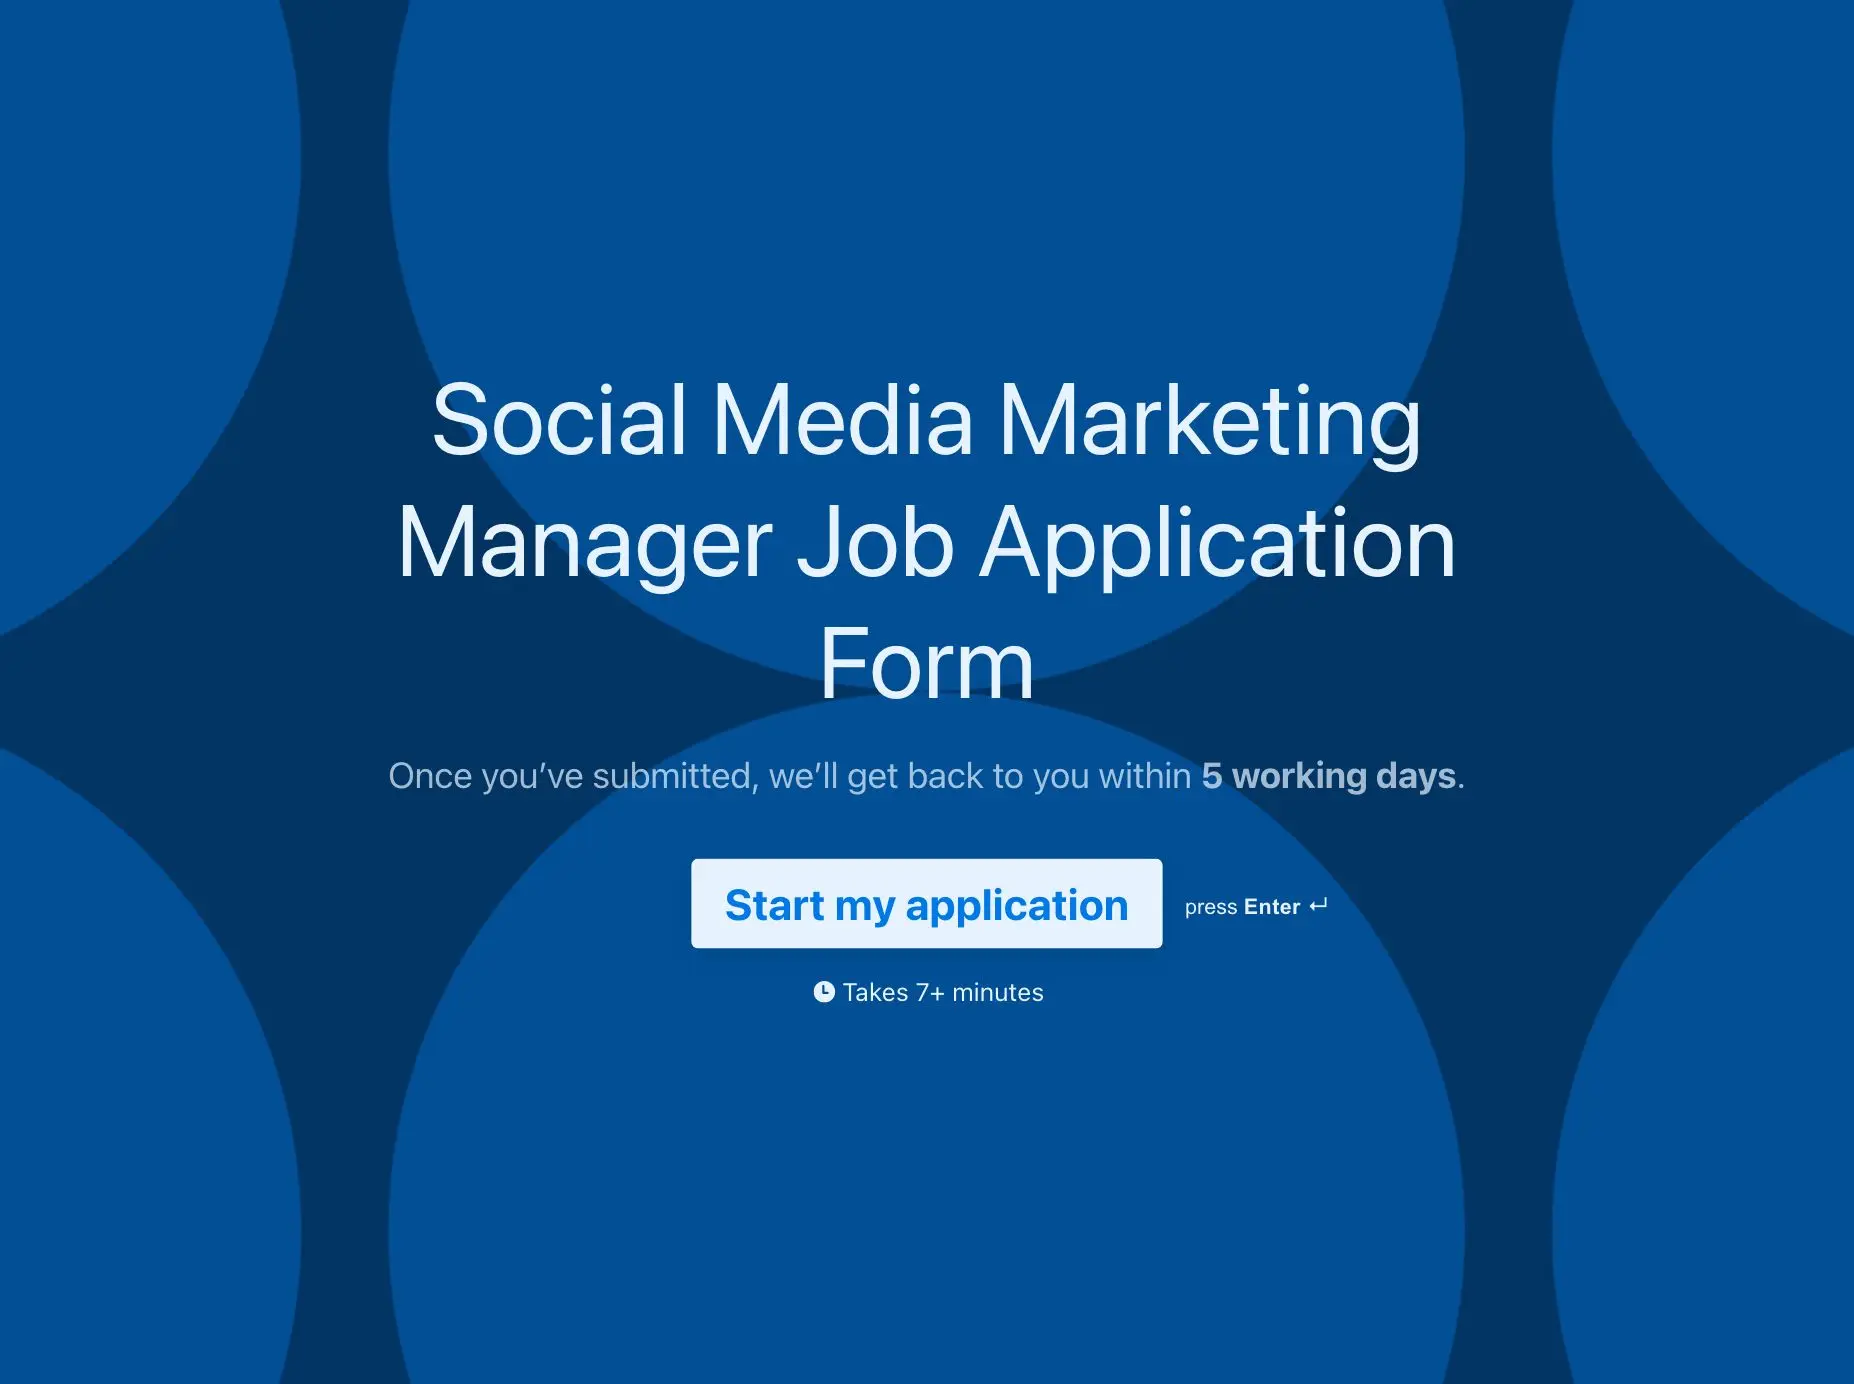 Social Media Marketing Manager Job Application Form Template Hero